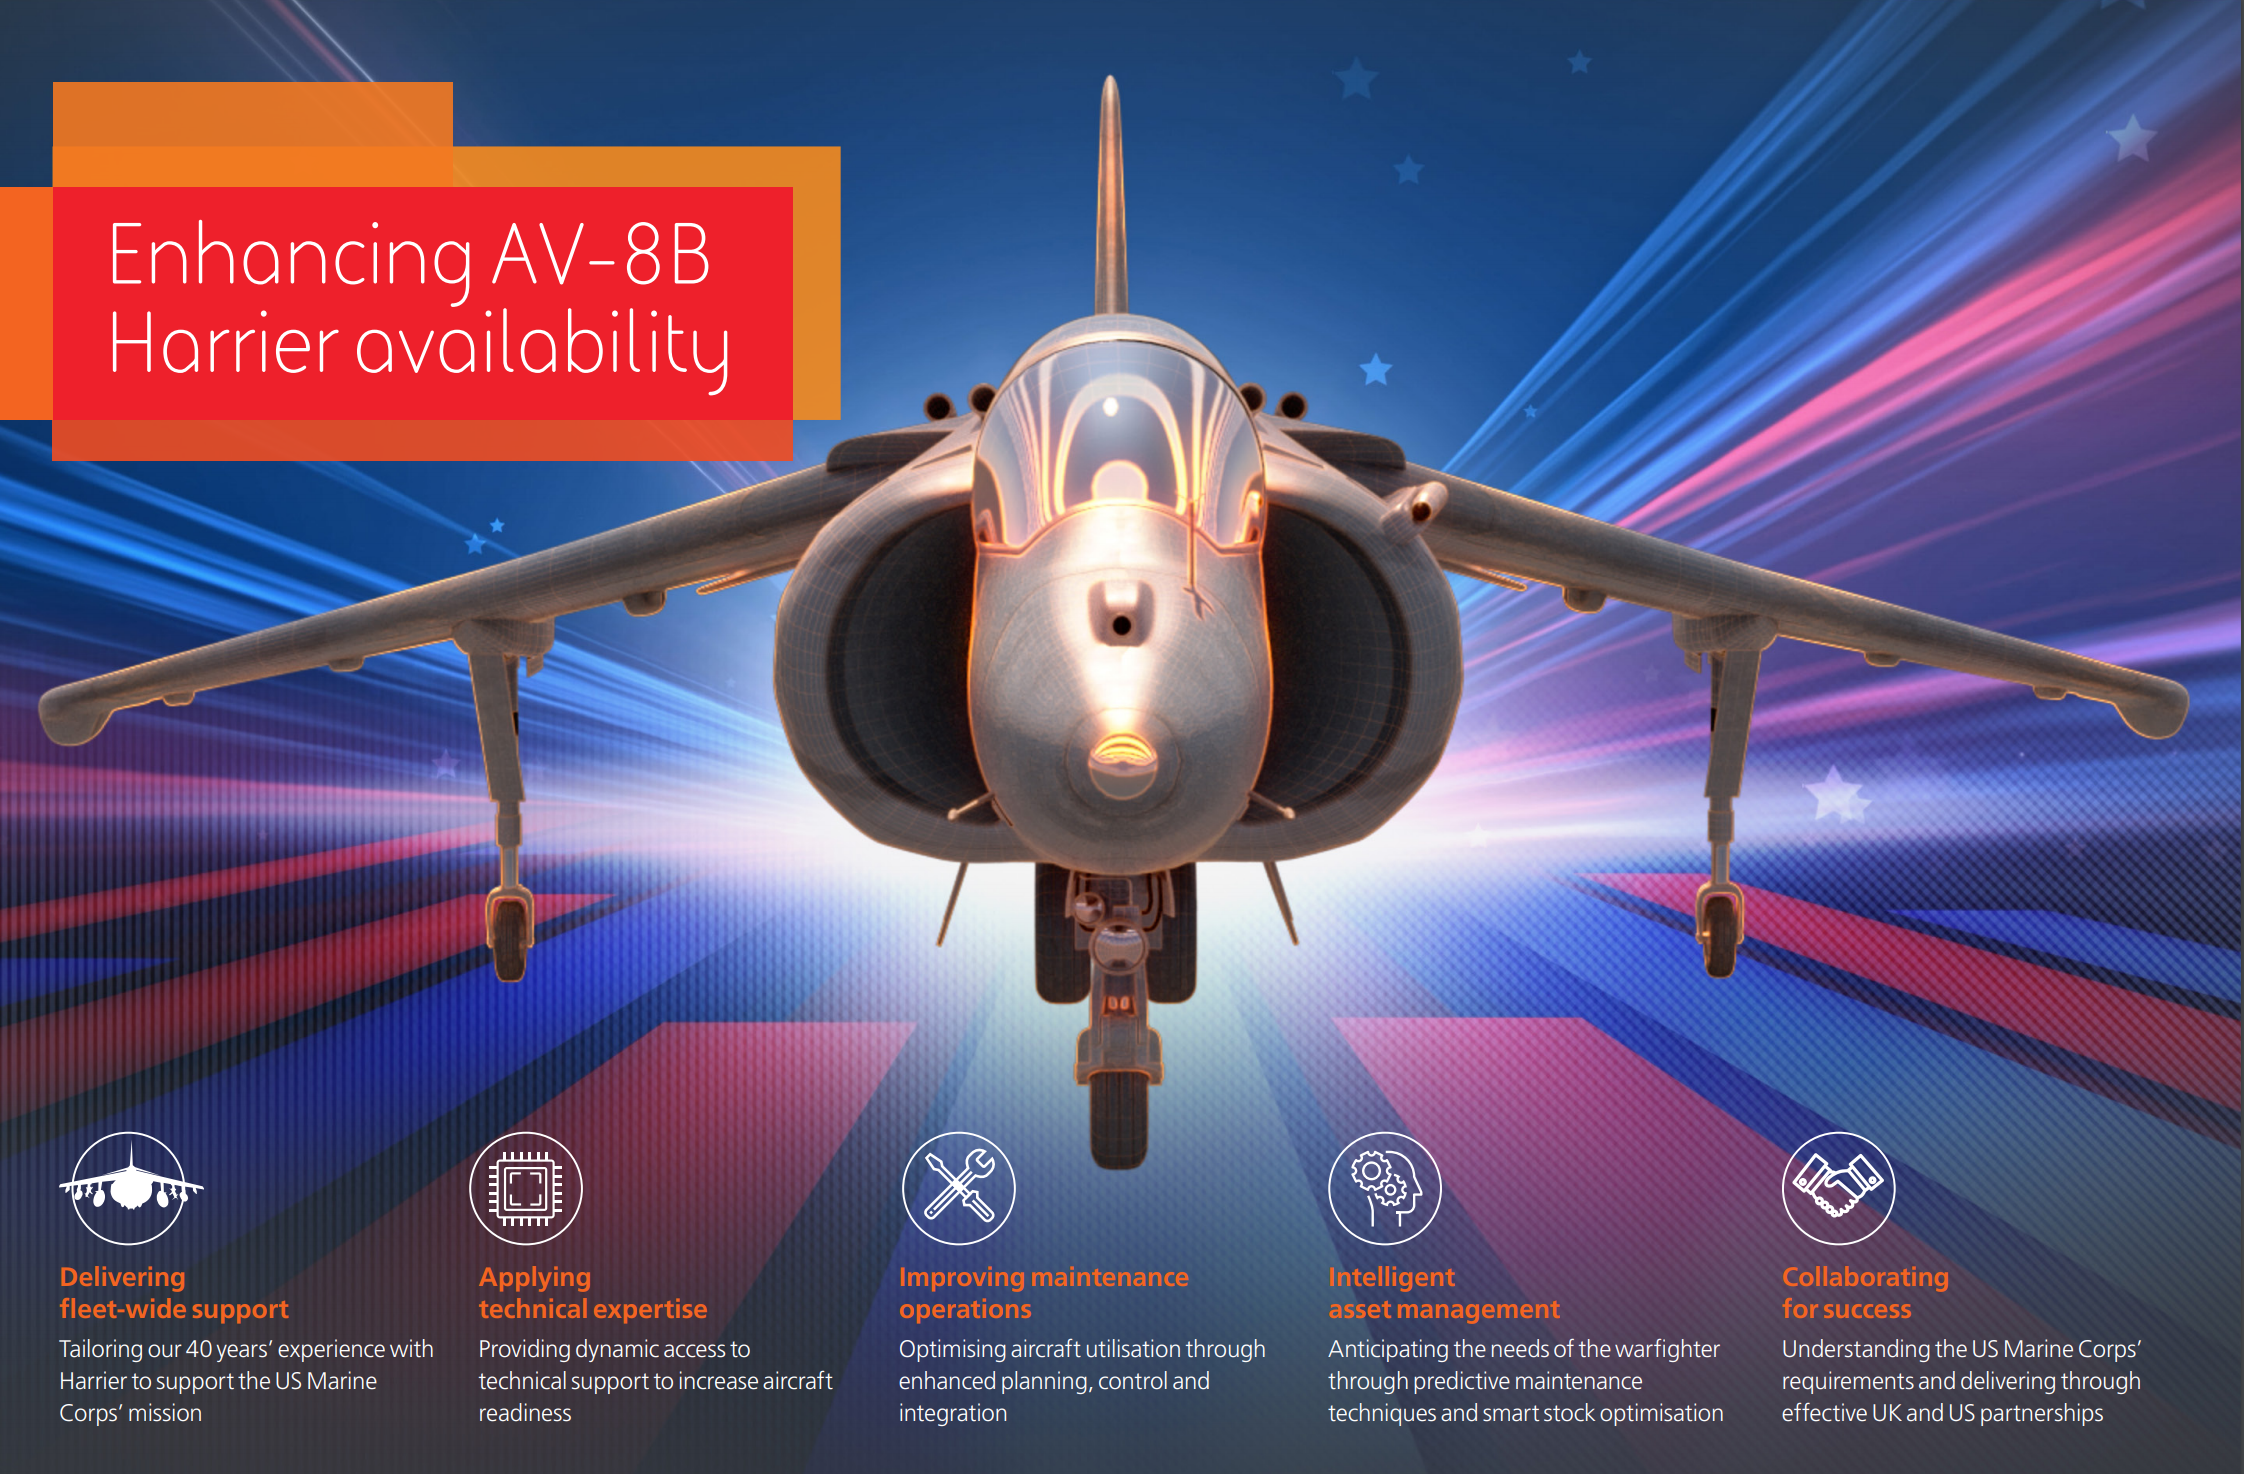 New Service Contract Will Support AV-8B Harrier Through 2029